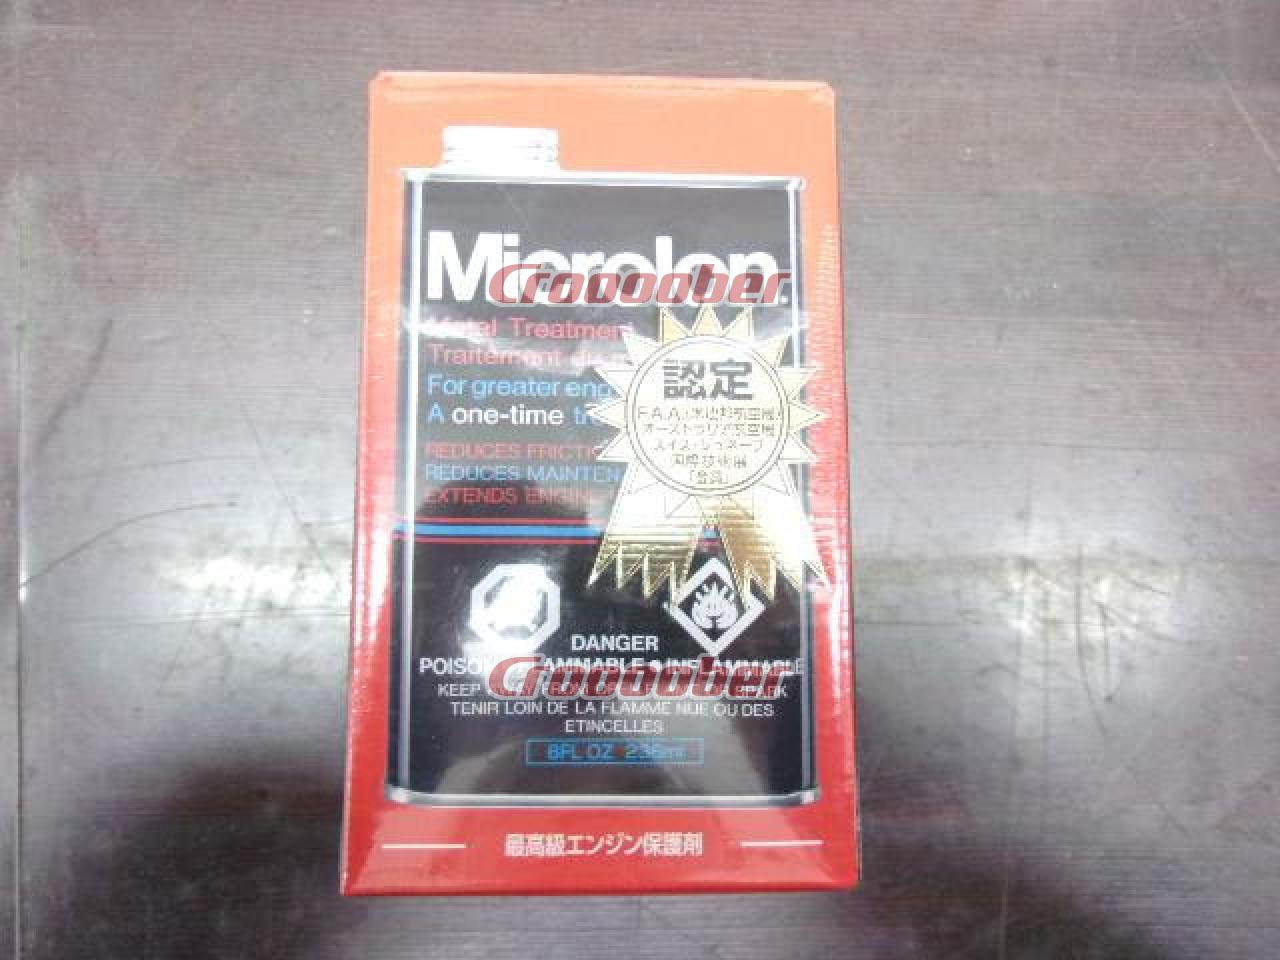 Microlon(マイクロロン) メタルトリートメントリキッド 黒箱 8オンス | ケミカル用品 添加剤パーツの通販なら |  Croooober(クルーバー)